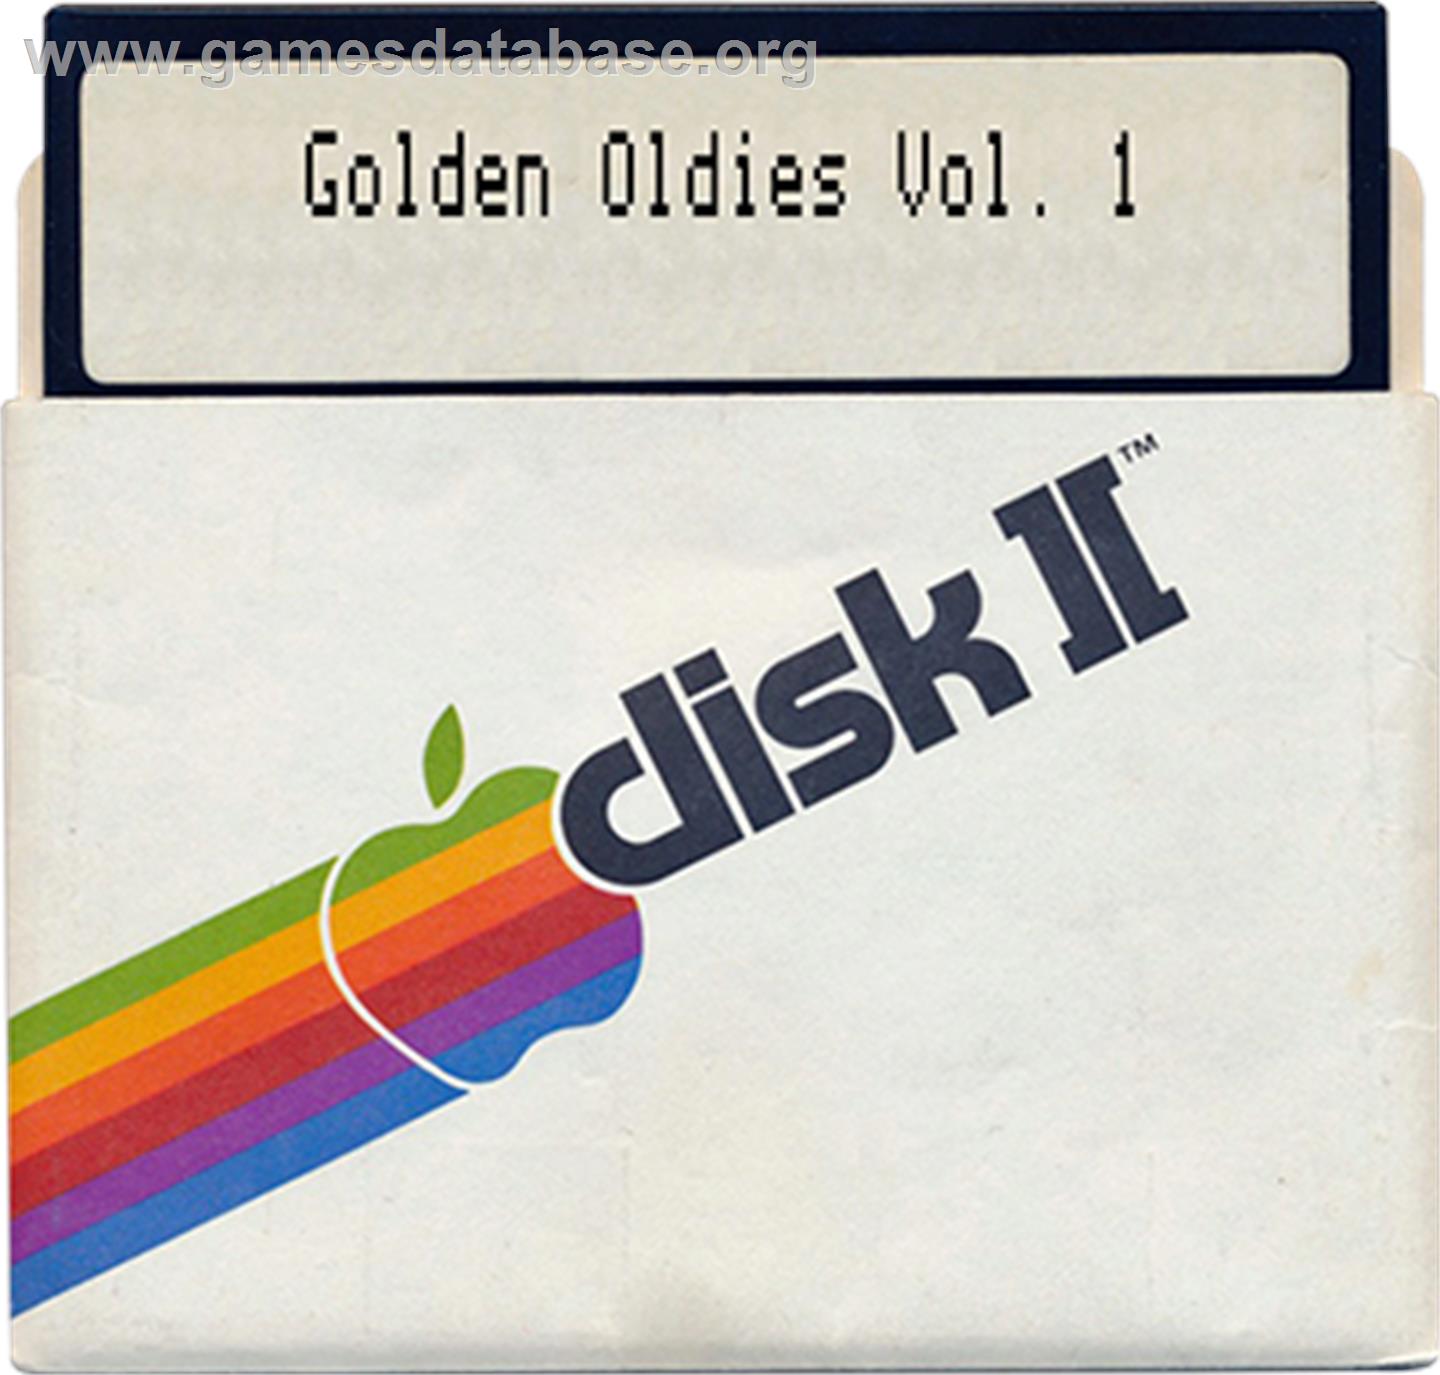 Golden Oldies Vol. 1: Computer Software Classics - Apple II - Artwork - Disc